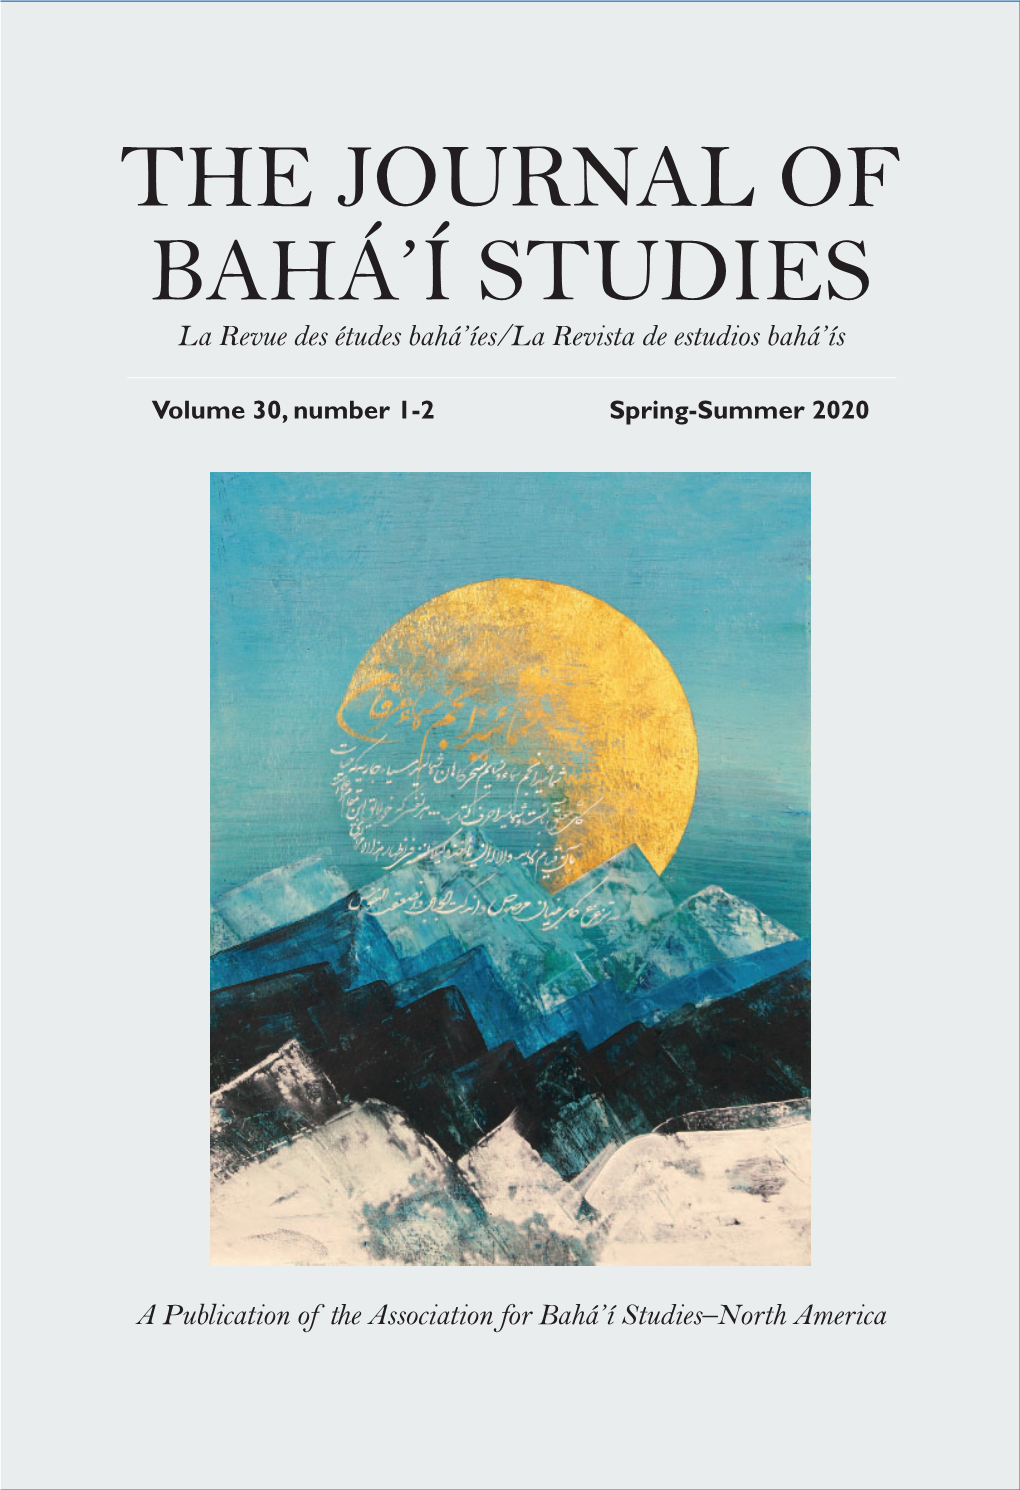 The Journal of Bahá'í Studies